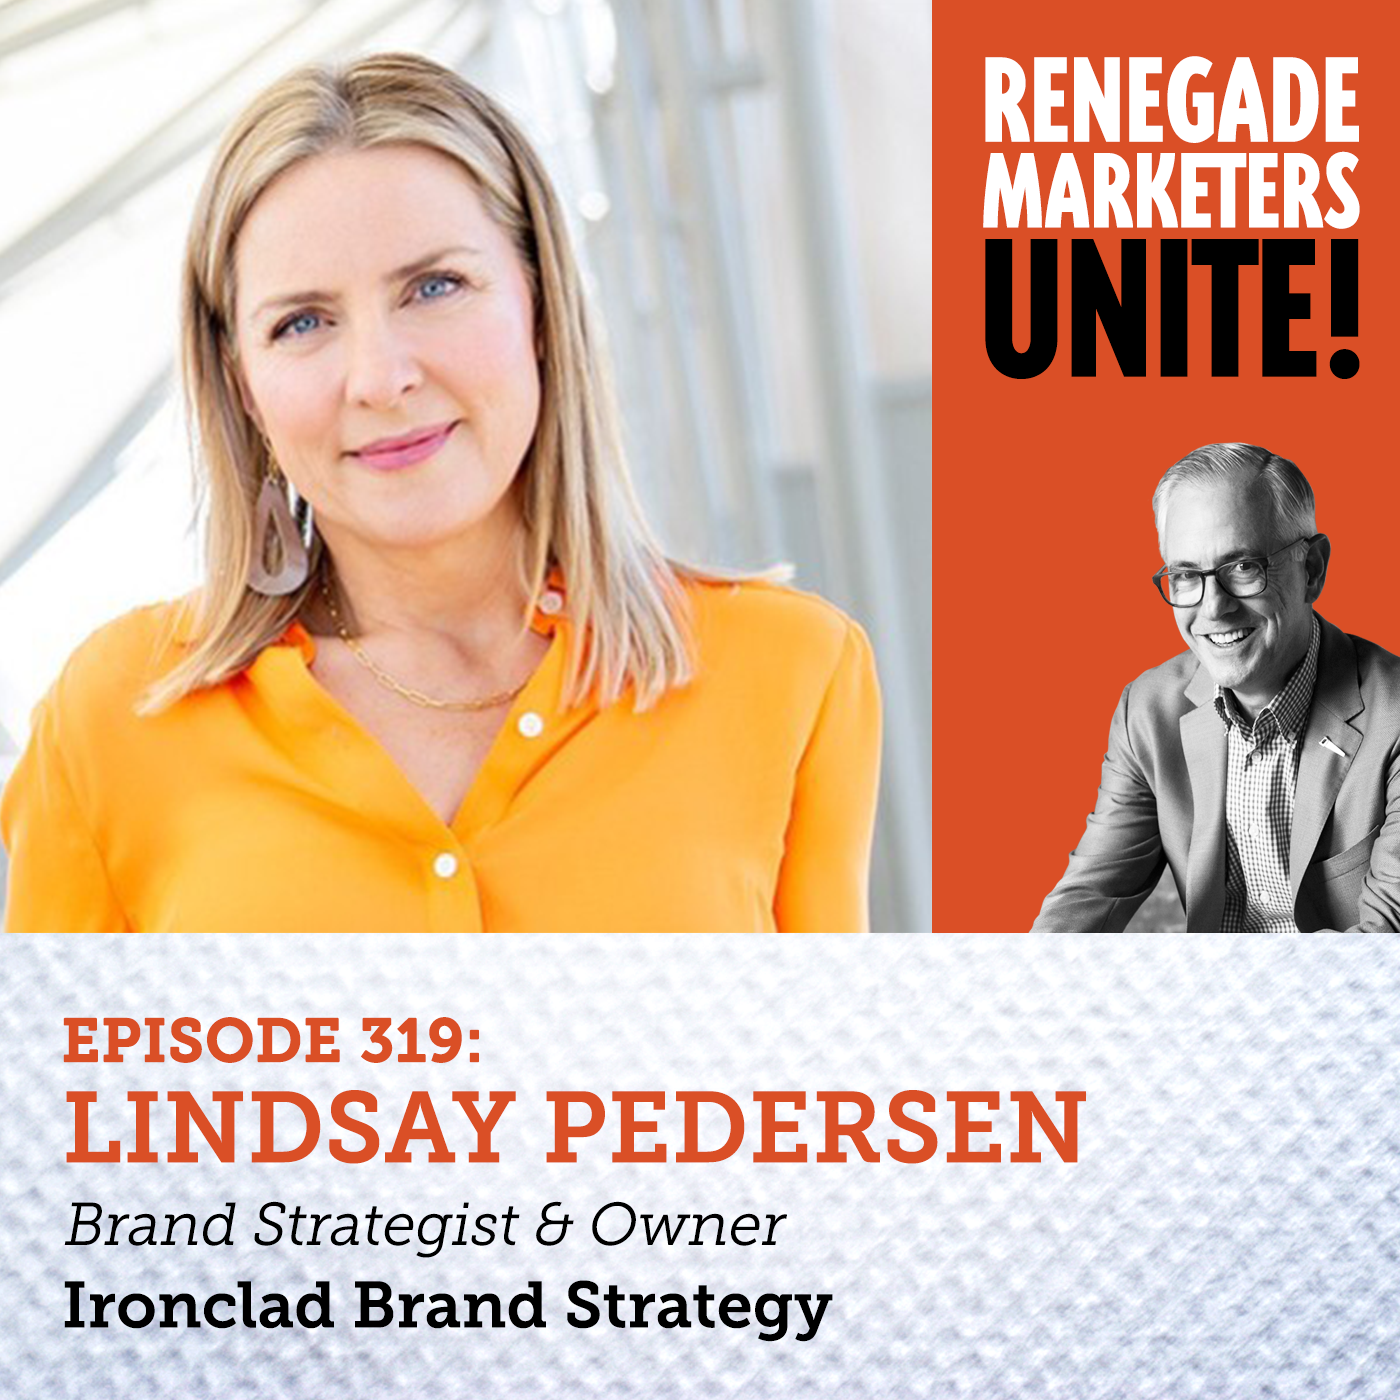 Lindsay Pedersen